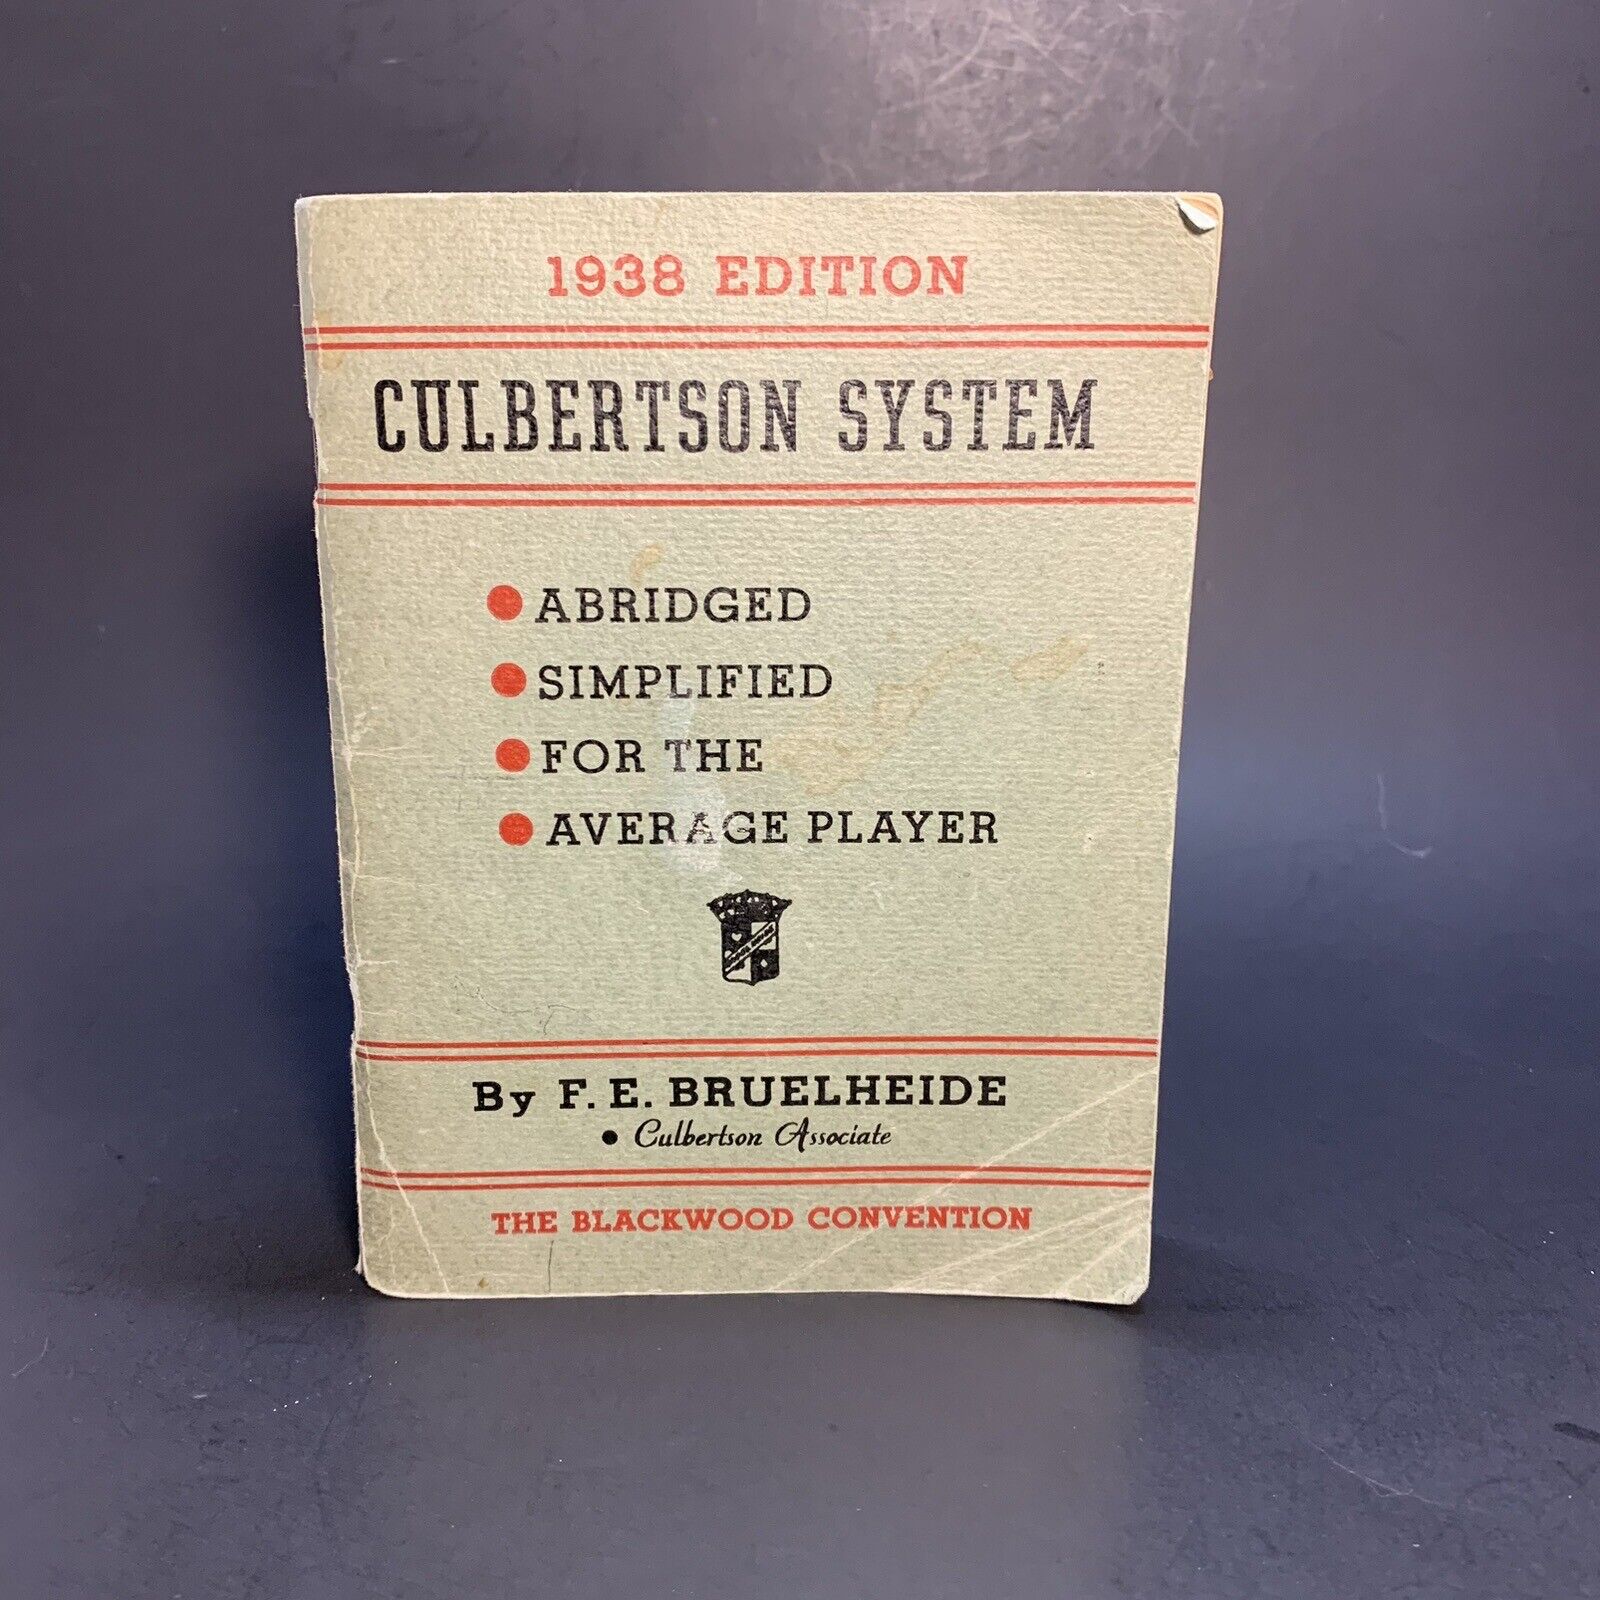 Vintage Culbertson System 1938 Bridge Rules Methods Cards Game Paper Ephemera